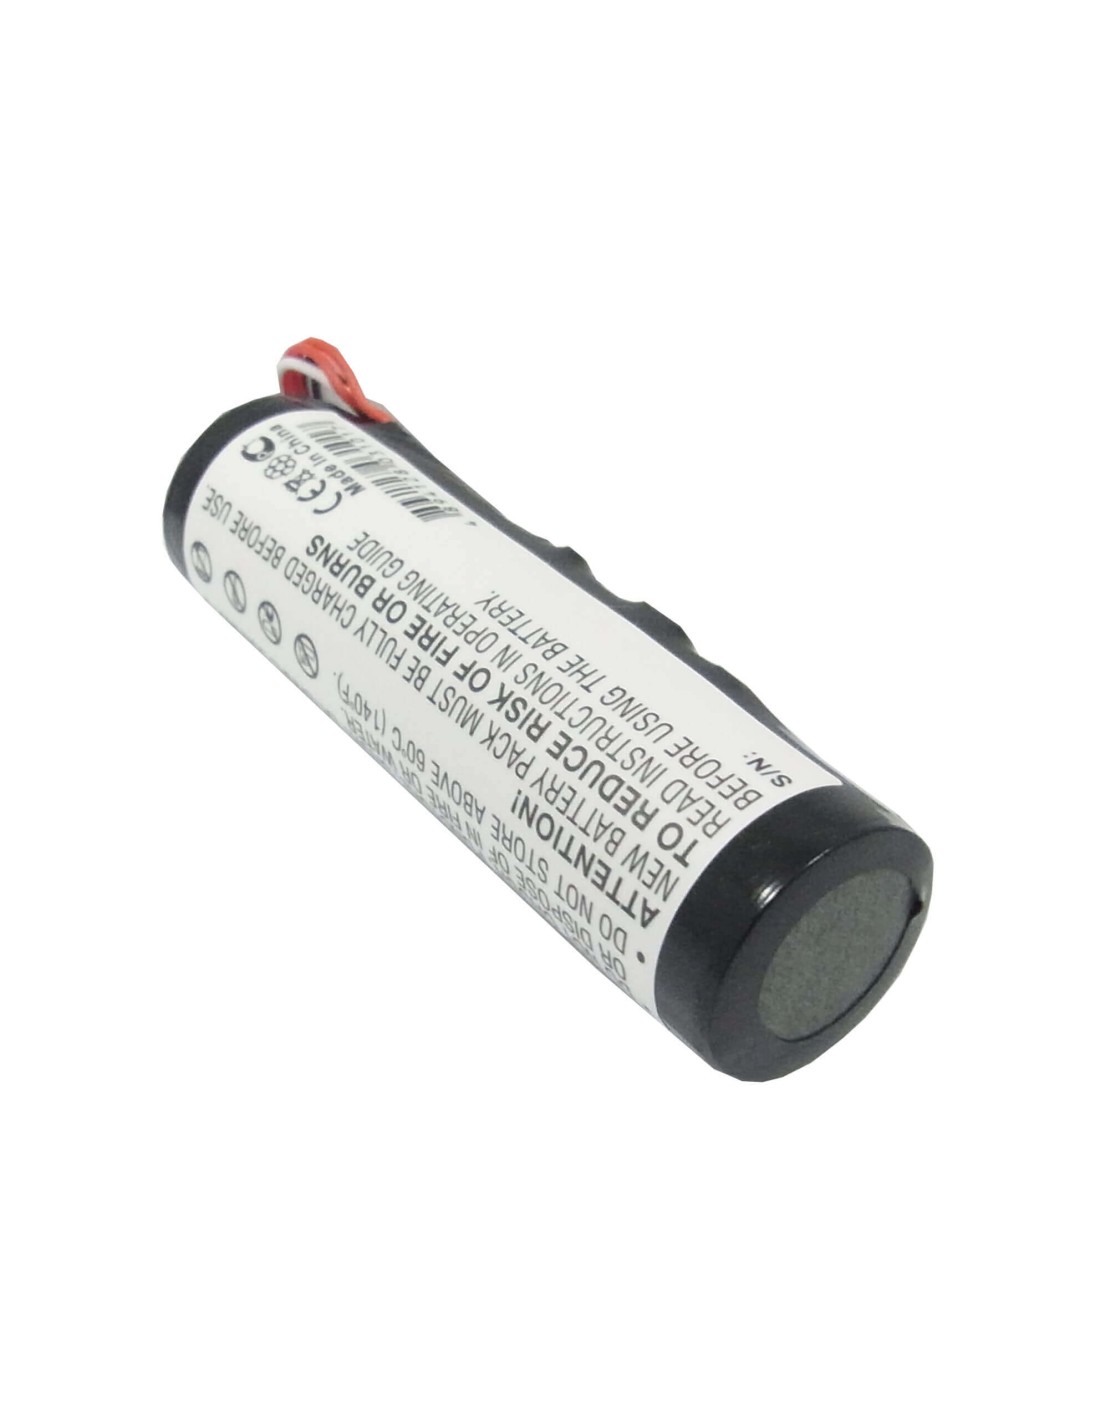 Battery for Navigon Pna-5000, Transonic 5000, Transonic Pna-5000 3.7V, 2200mAh - 8.14Wh